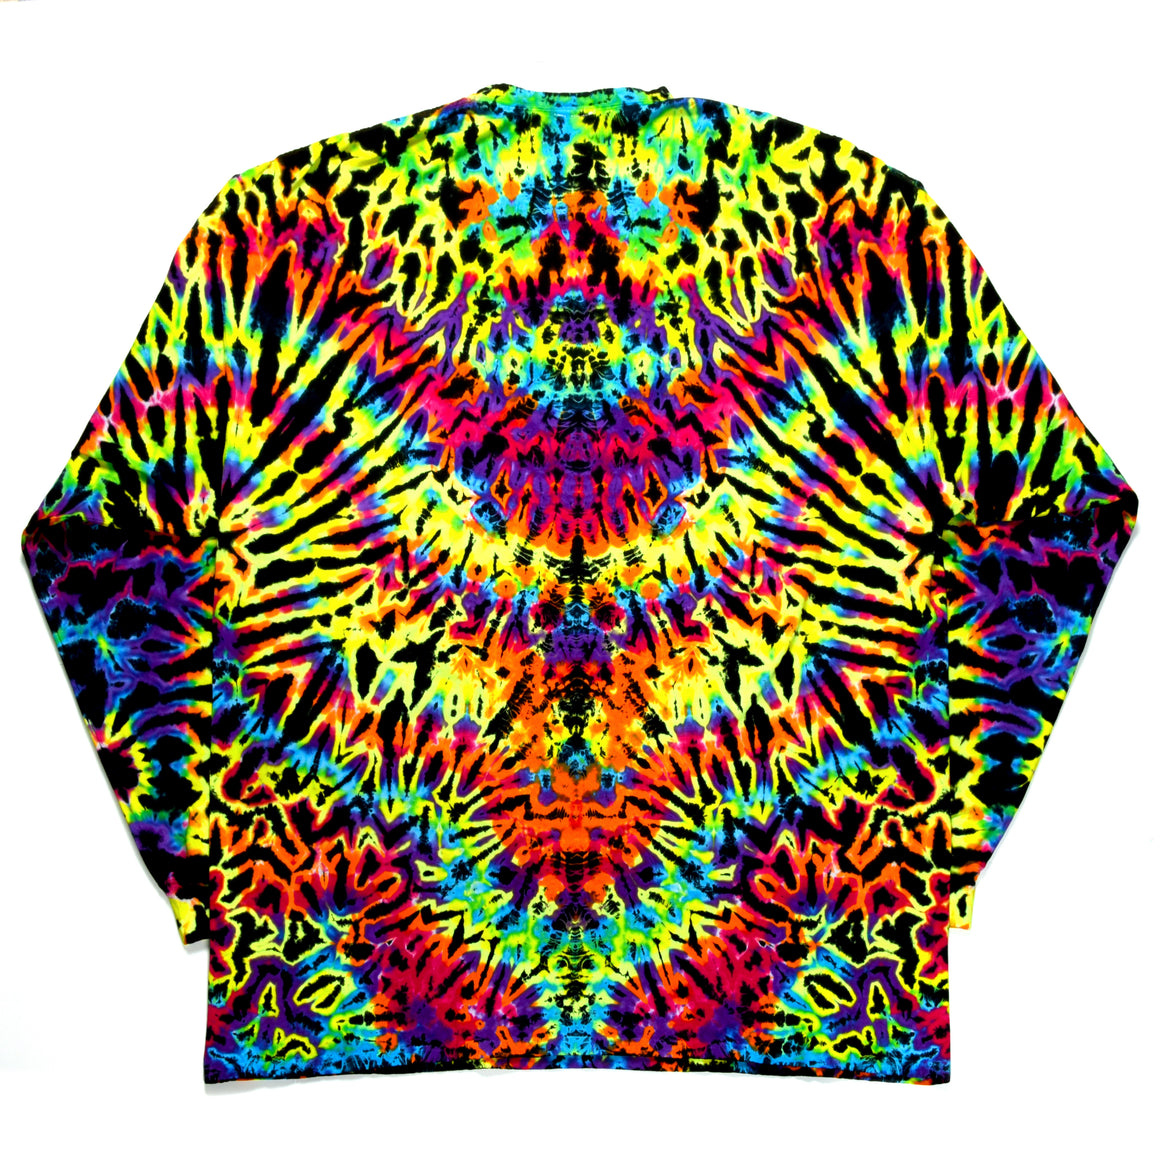 XXXL - UV Reactive Rainbow Mandala Combo Long-sleeve Tie Dye Shirt